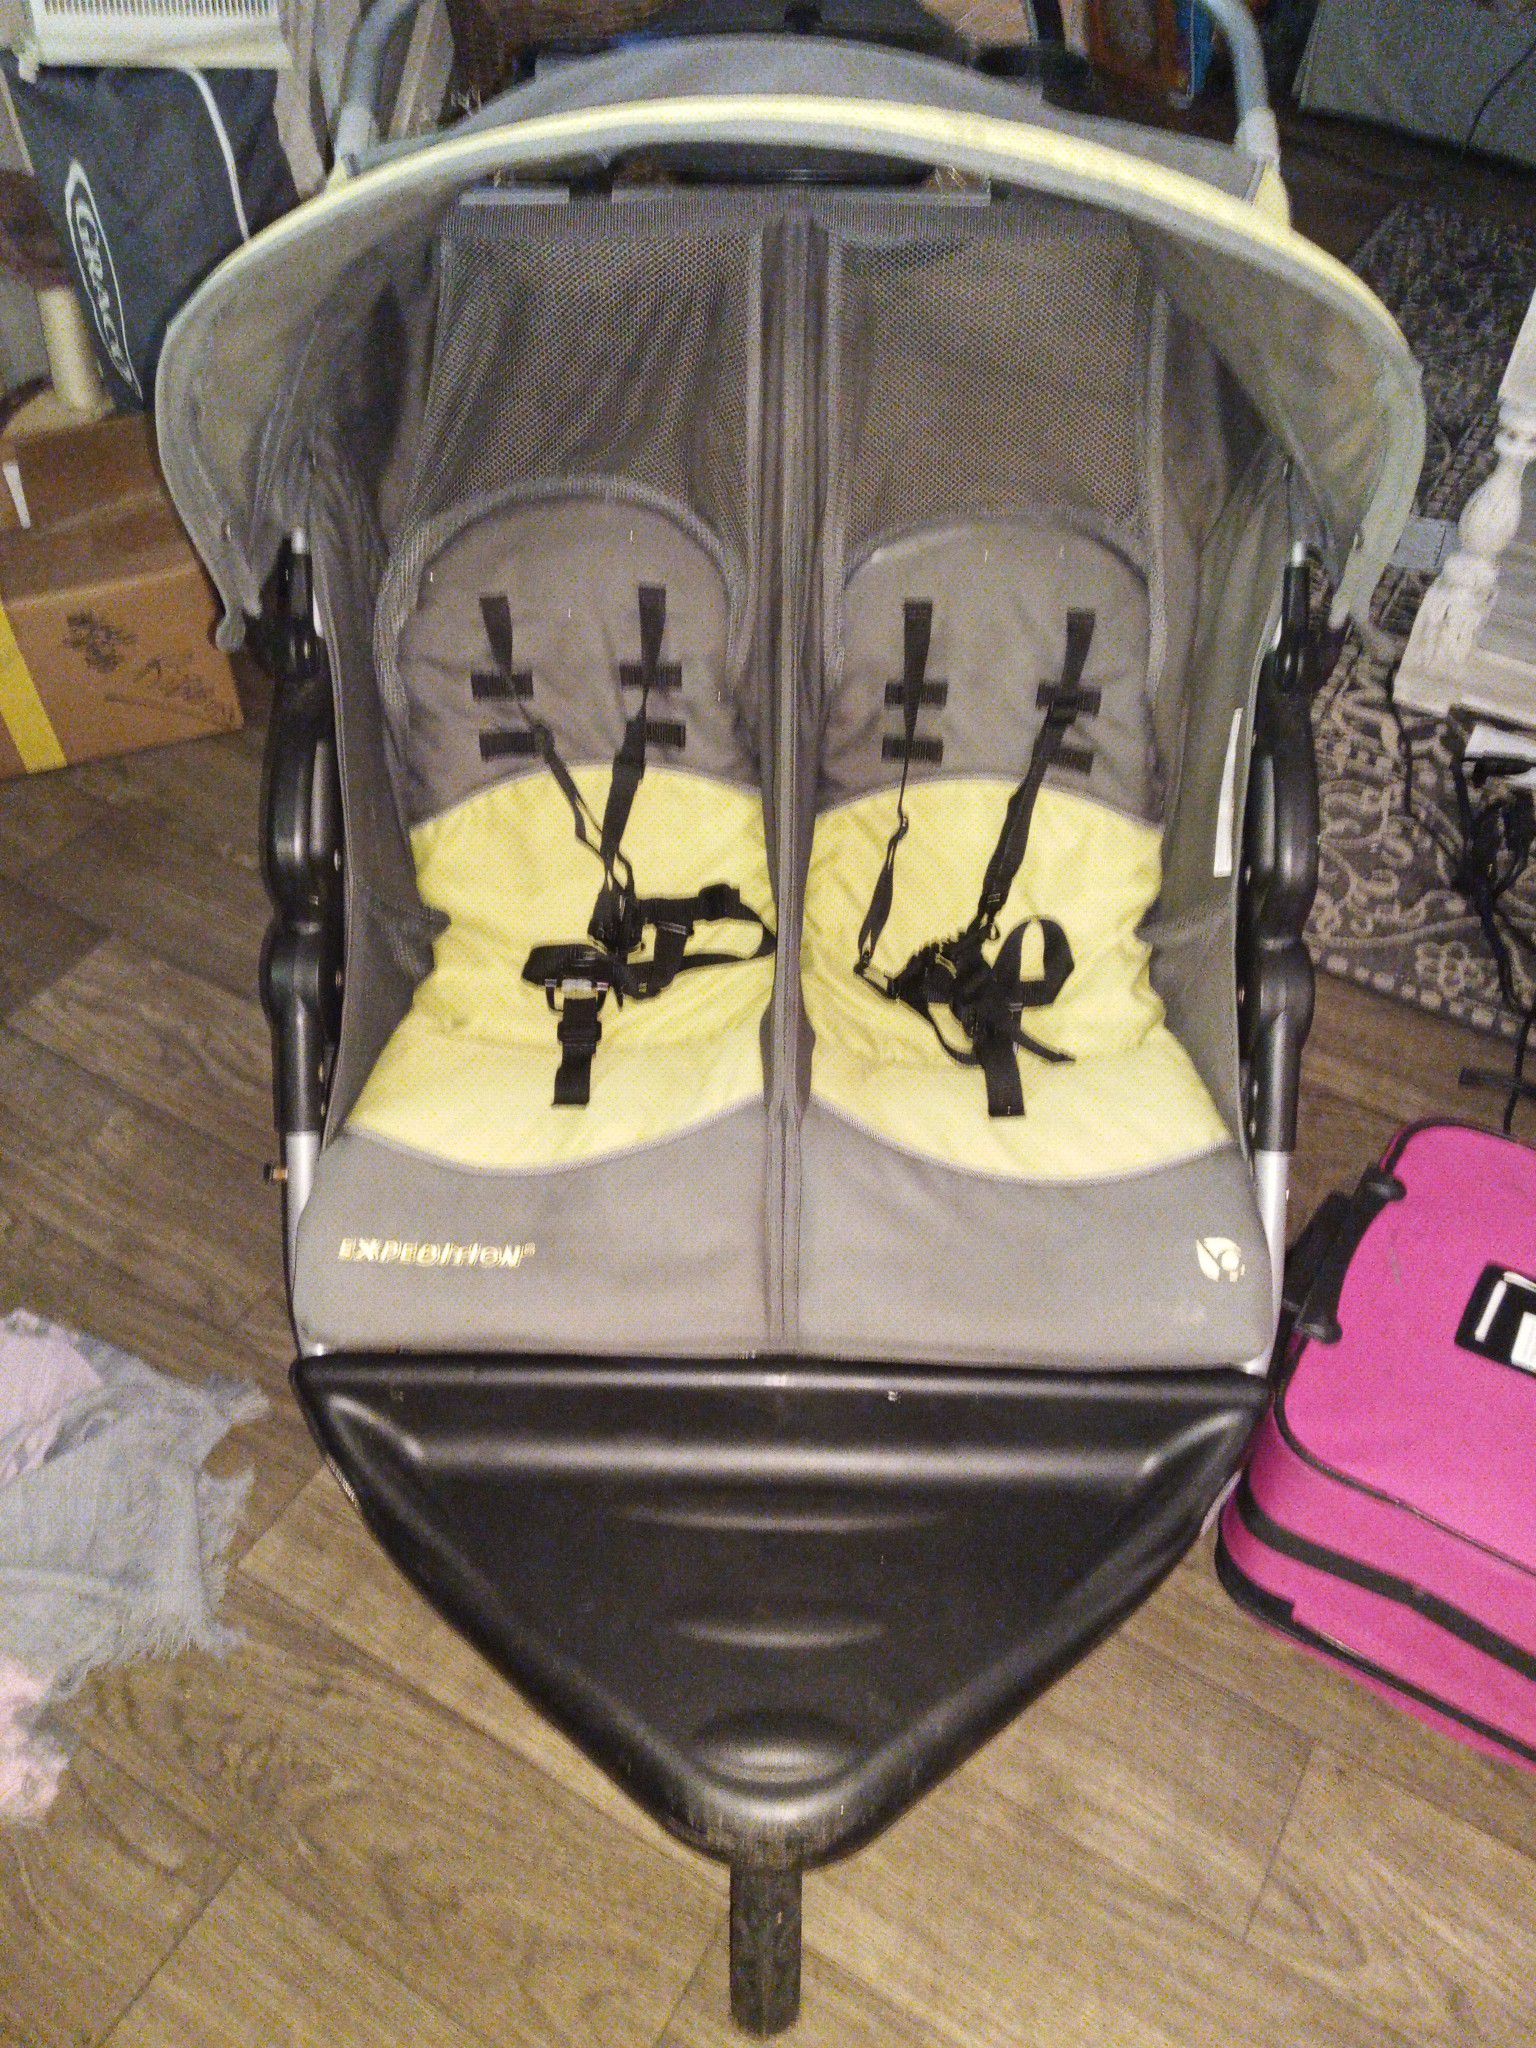 Babytrends double stroller